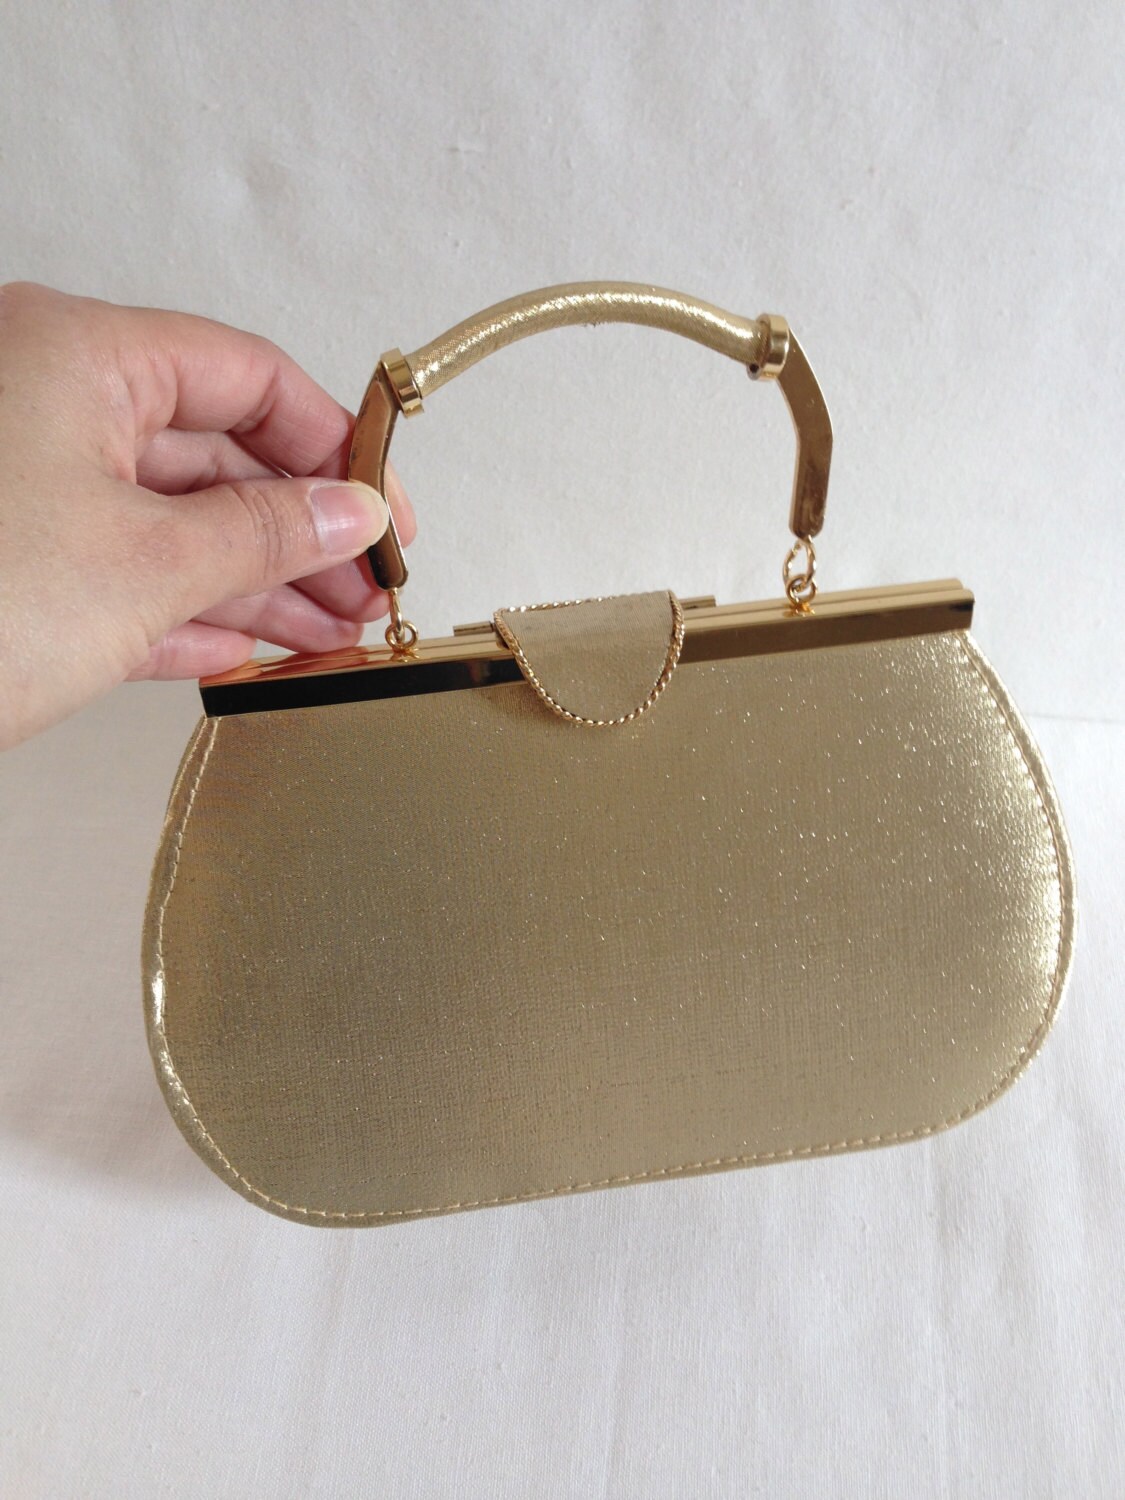 vintage gold tone evening clutch or crossbody handbag